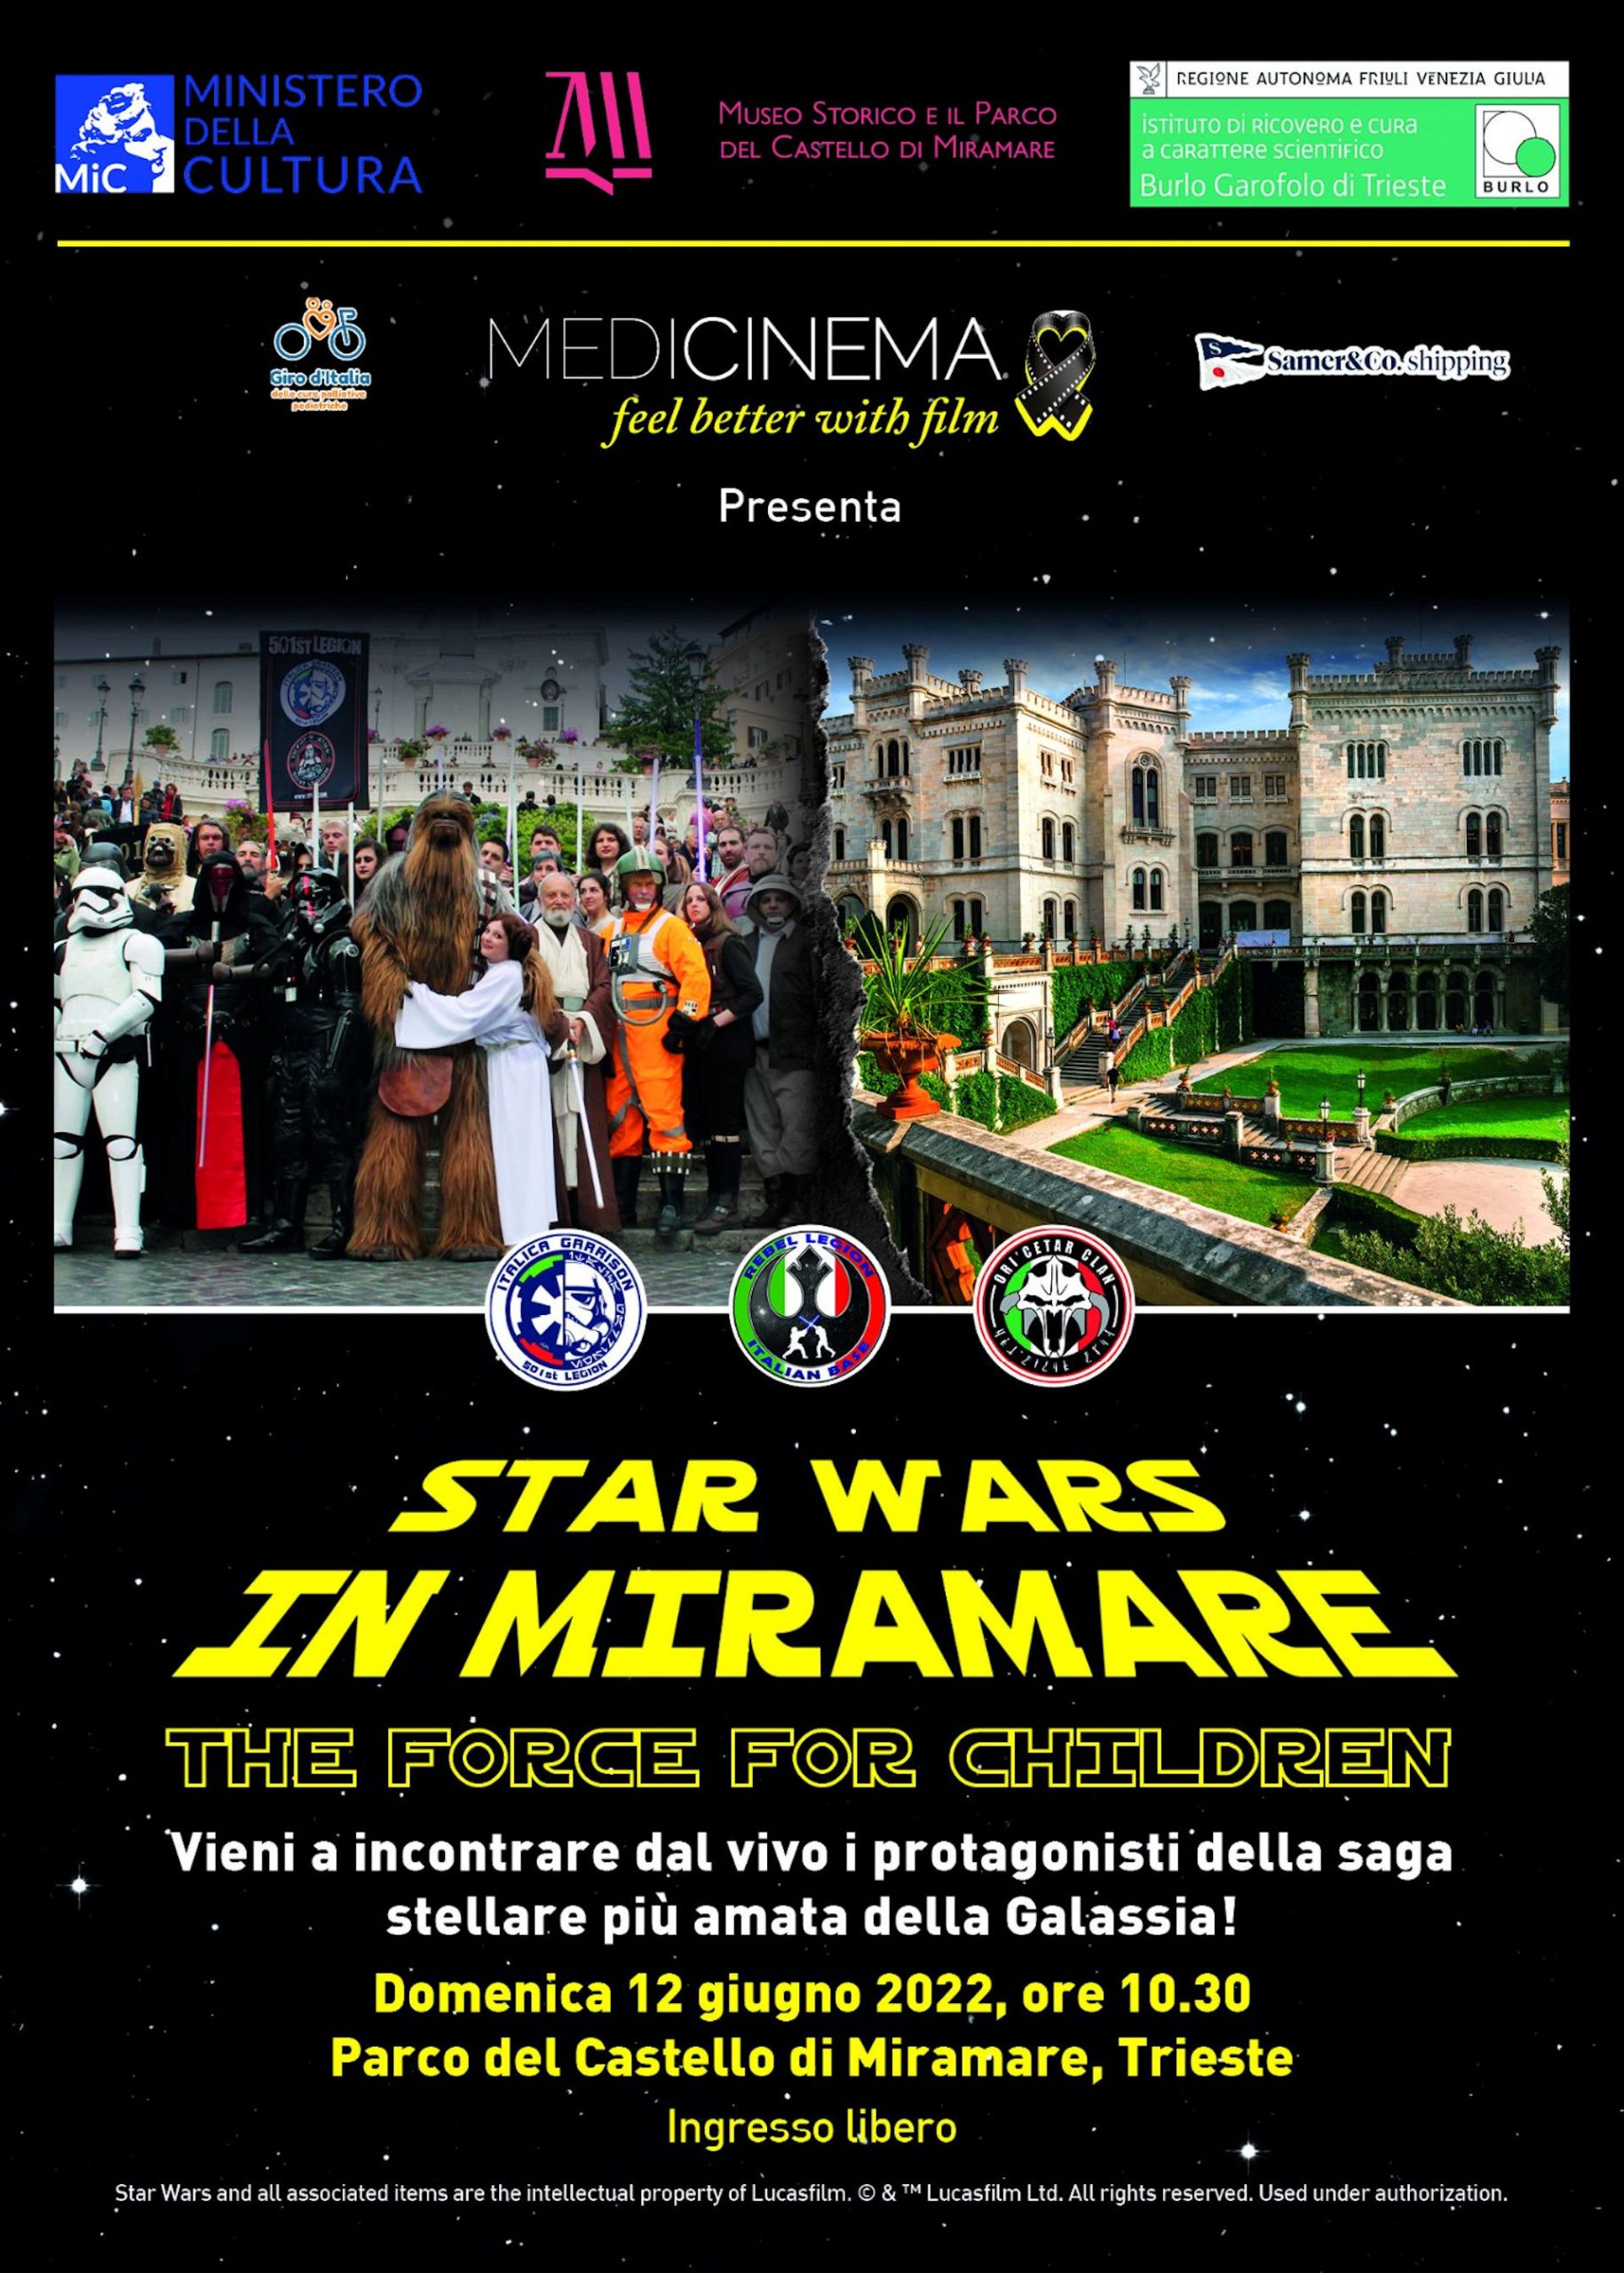 Star Wars in Miramare: The Force for Children